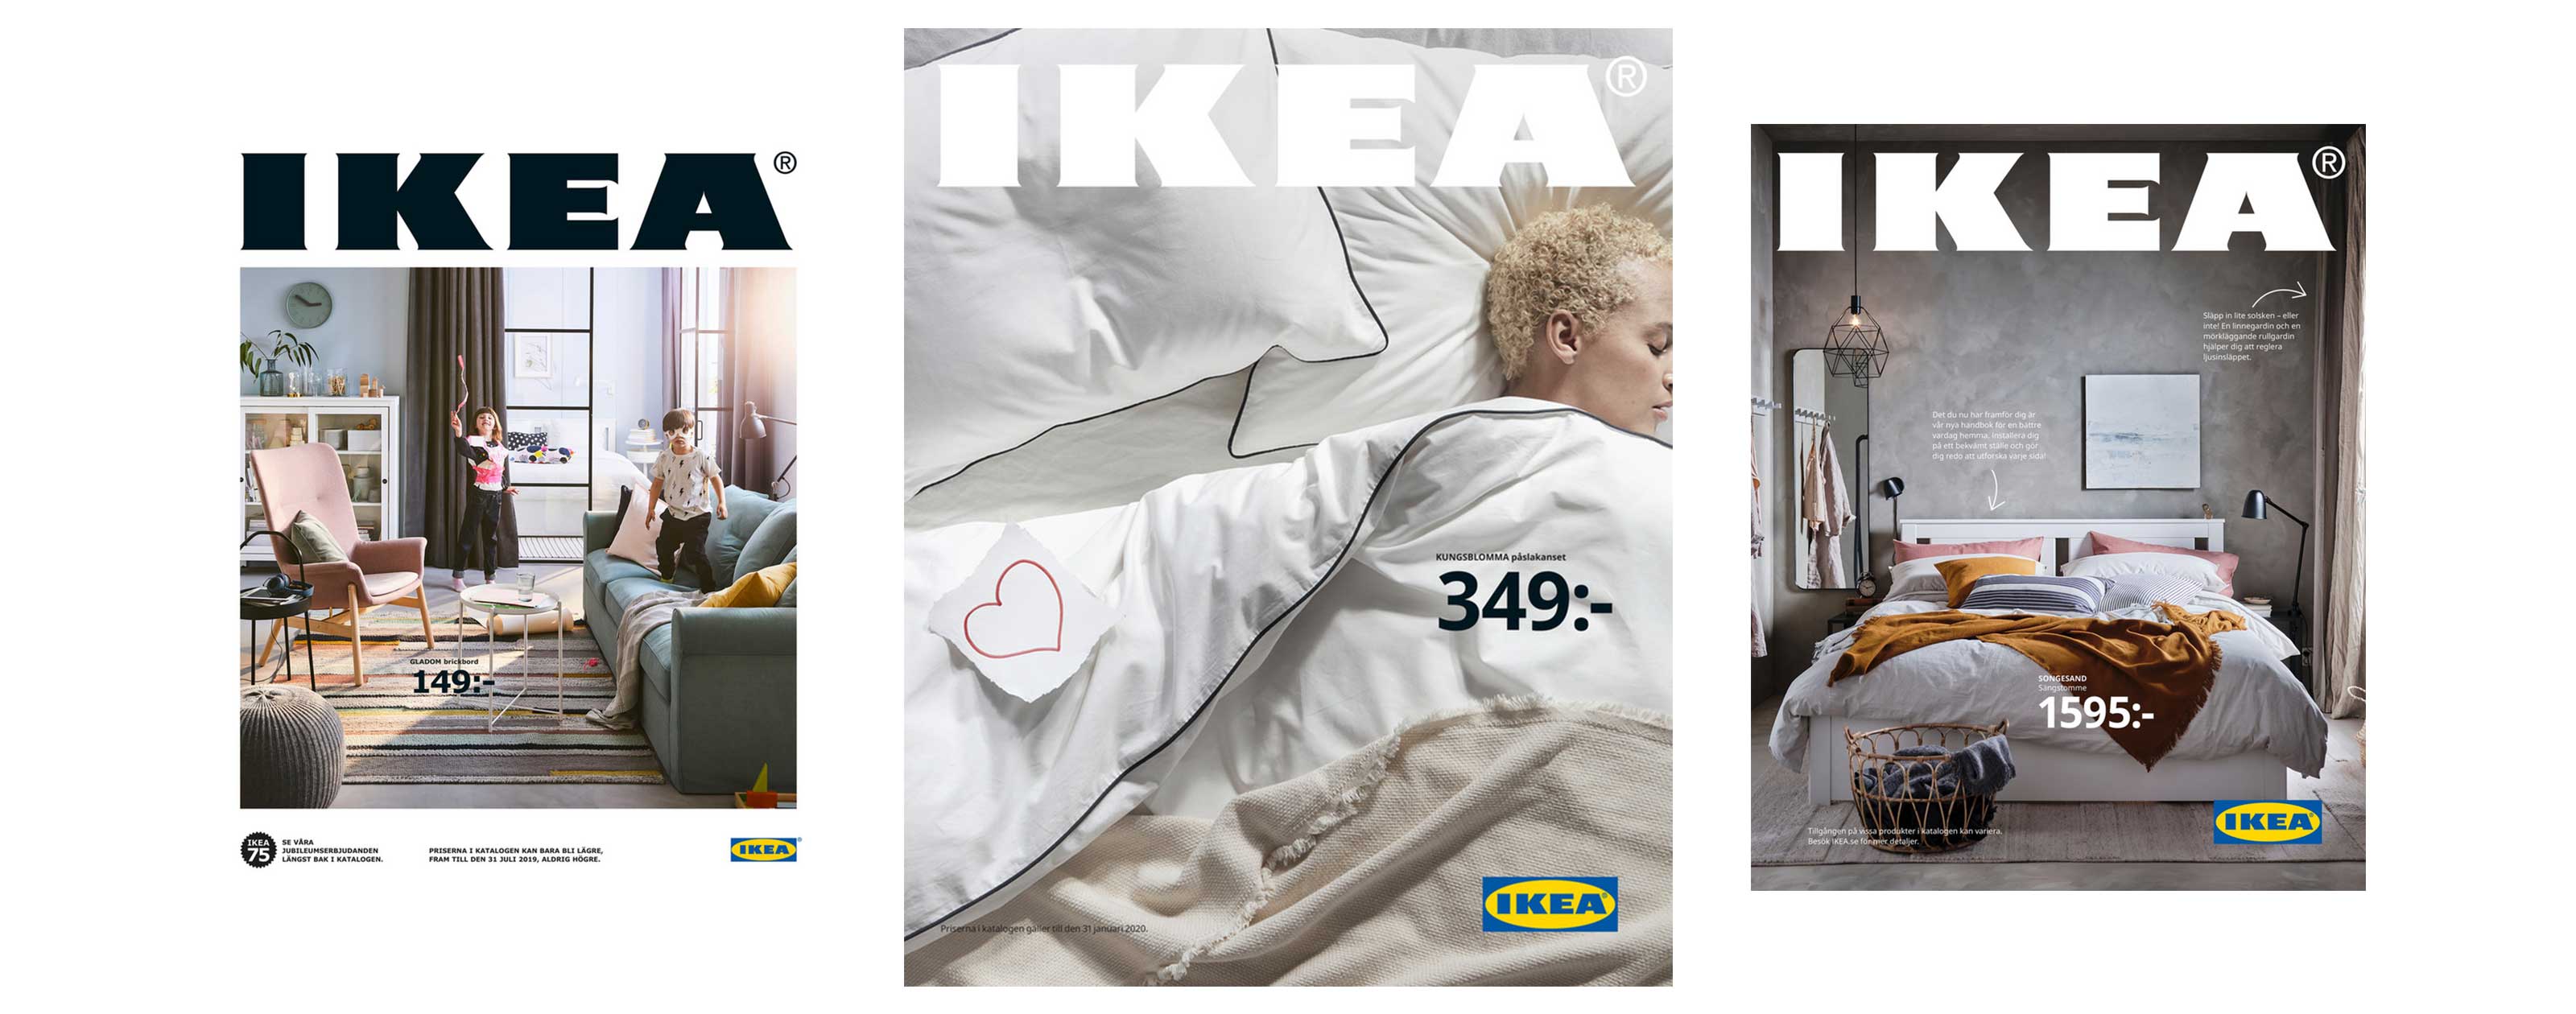 IKEA-slide 8